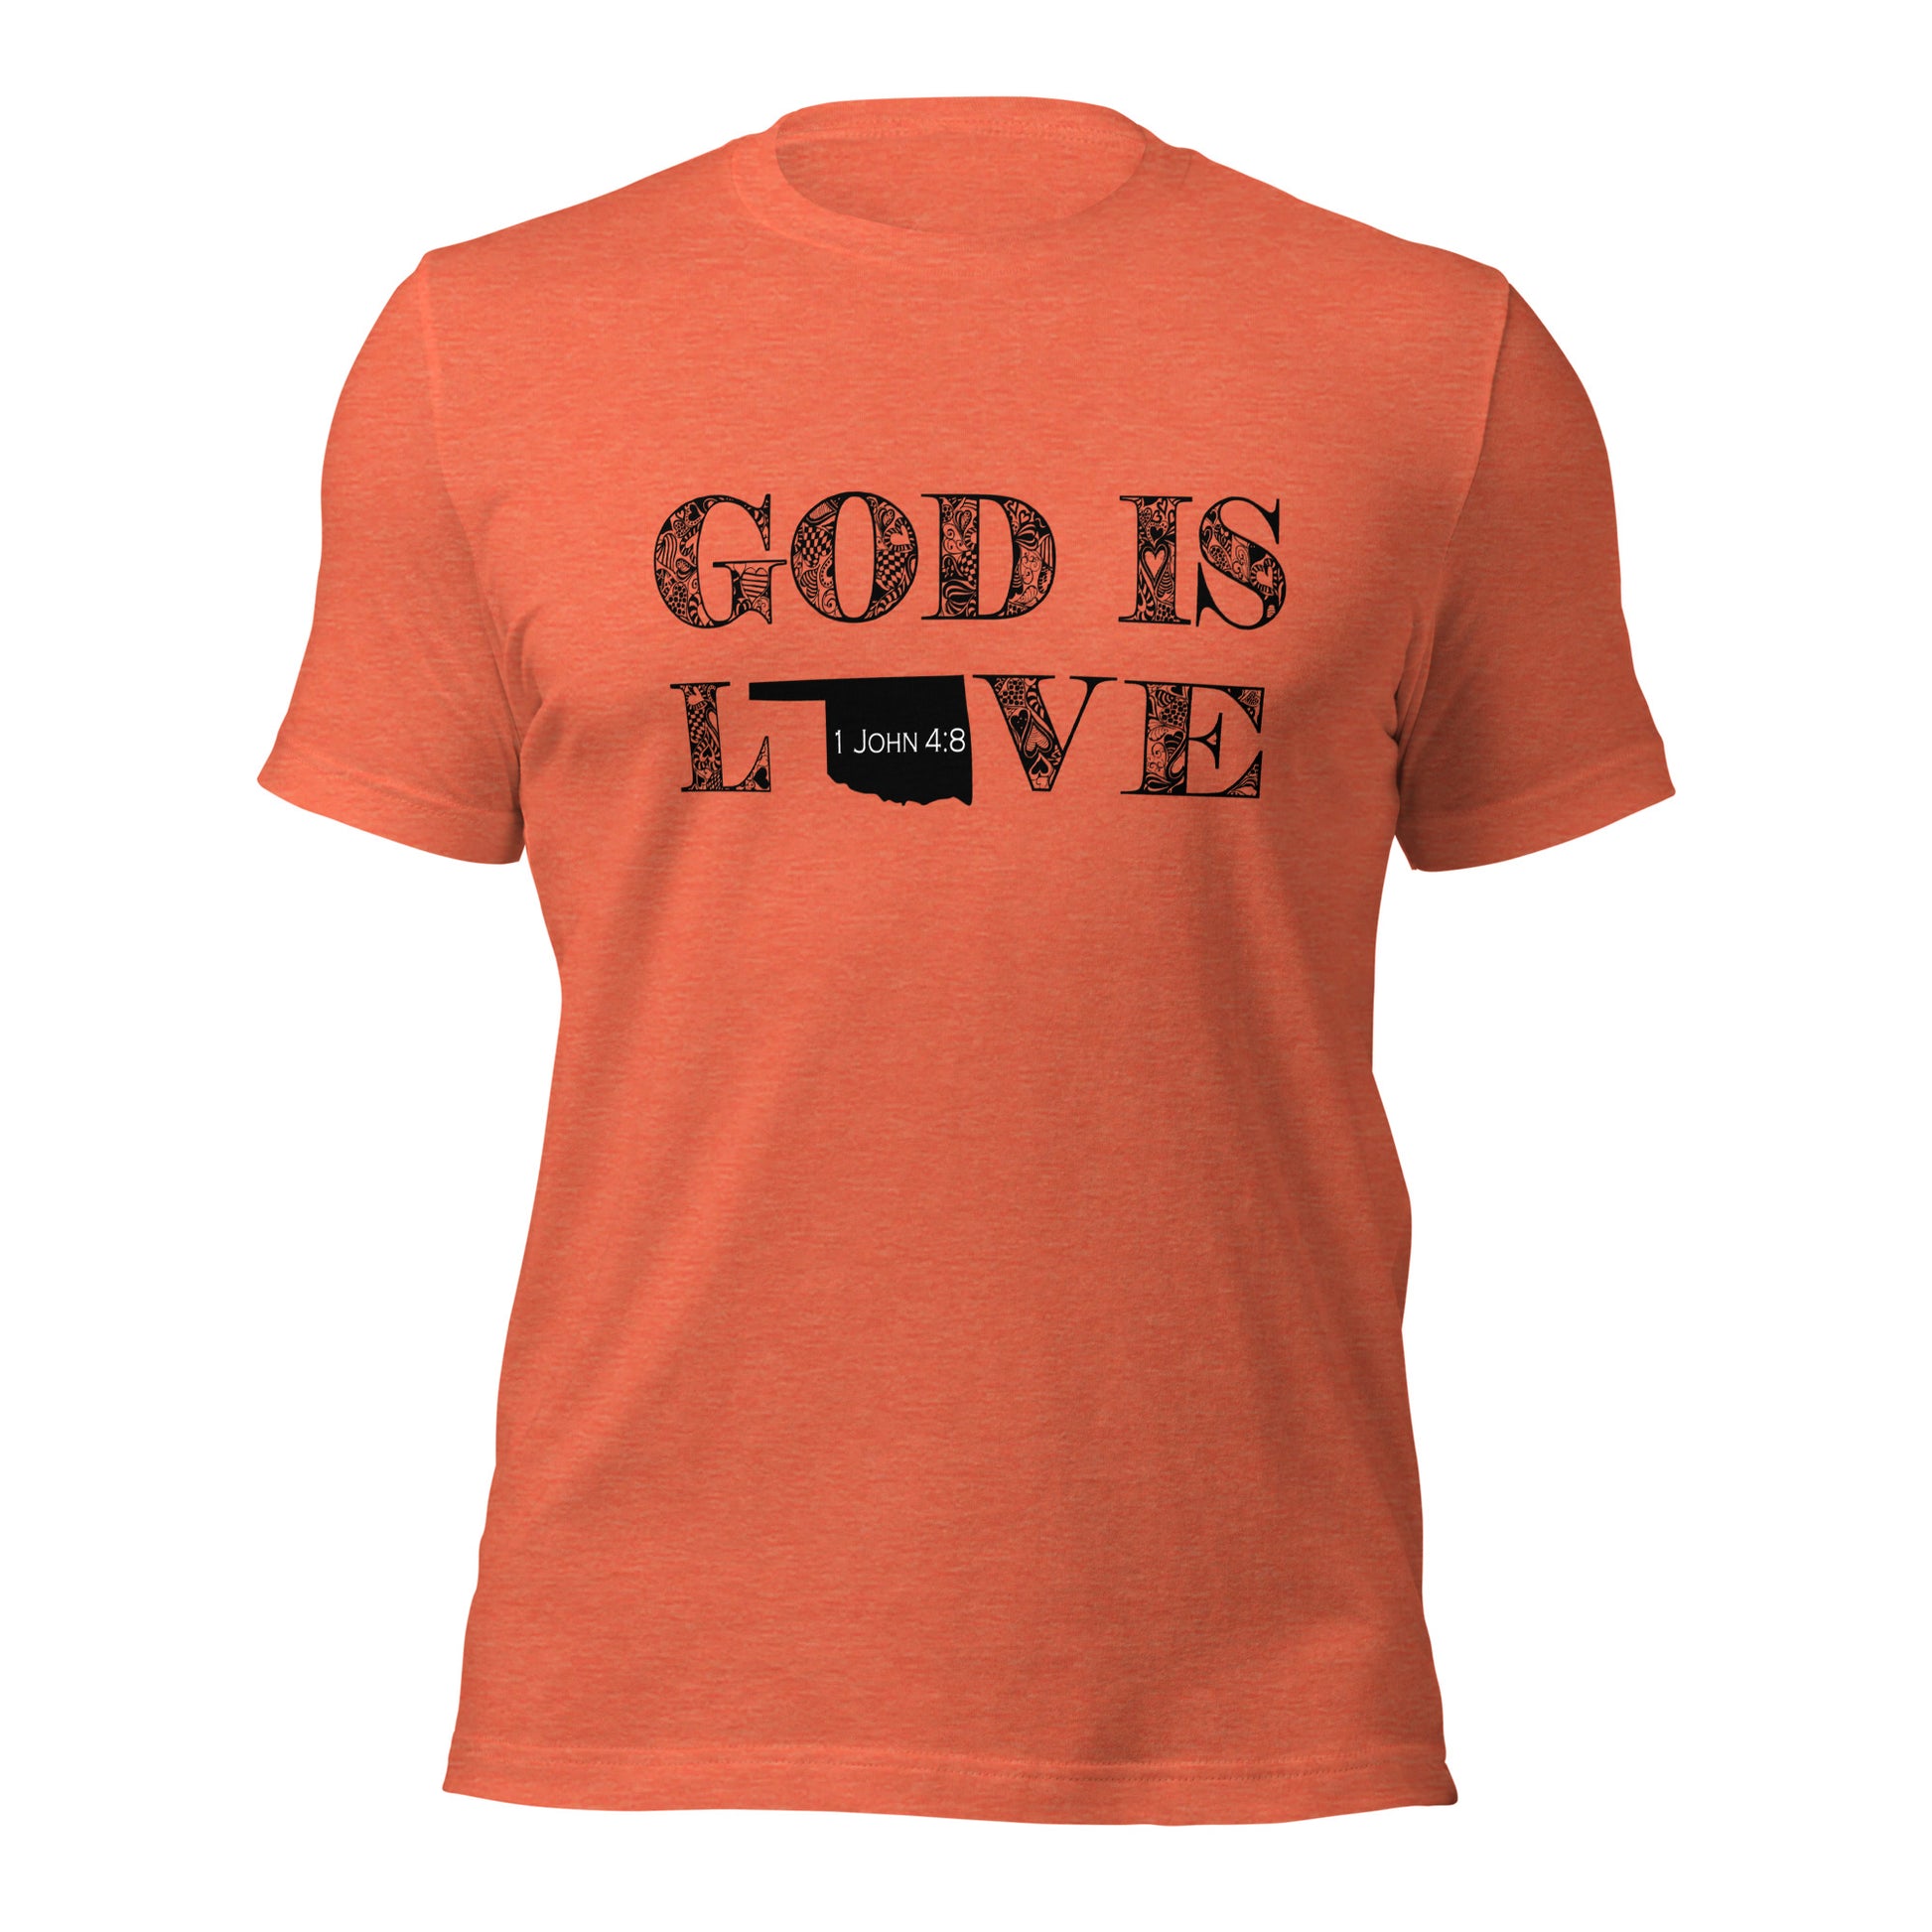 1 John 4:8 God is Love Unisex Oklahoma T-shirt in Heather Orange - front view